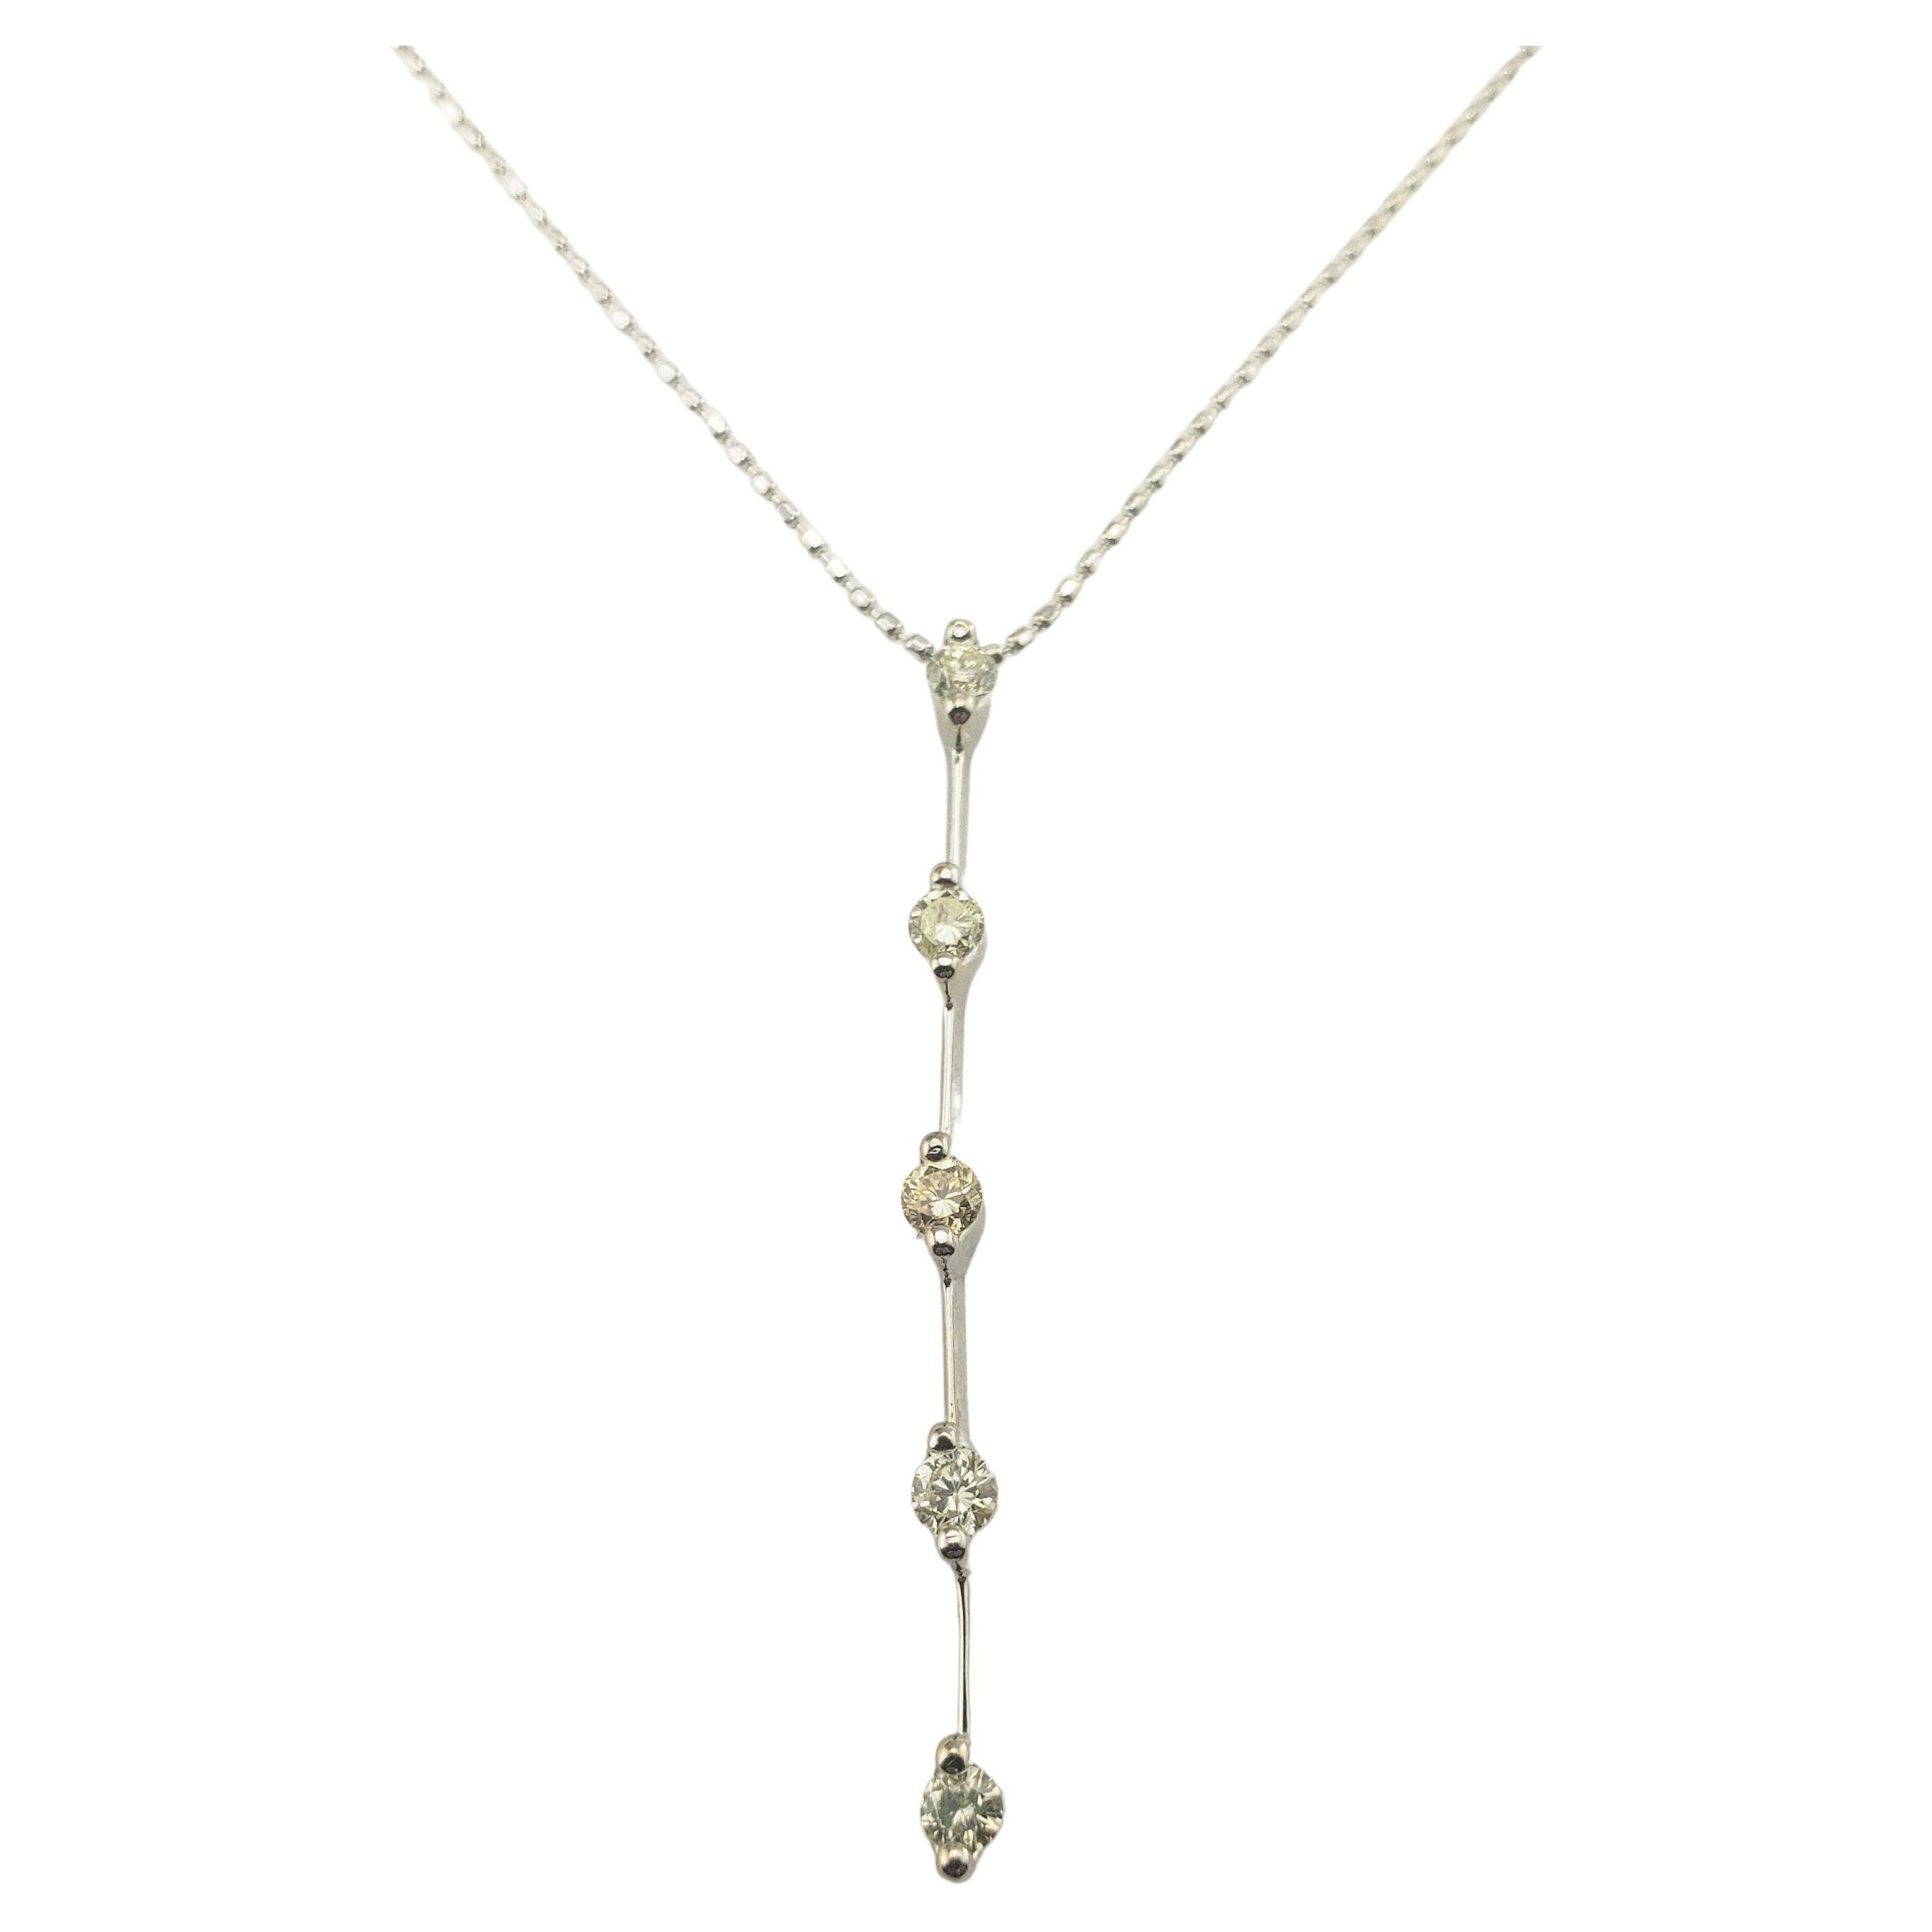 14 Karat White Gold Diamond Circle Pendant Necklace